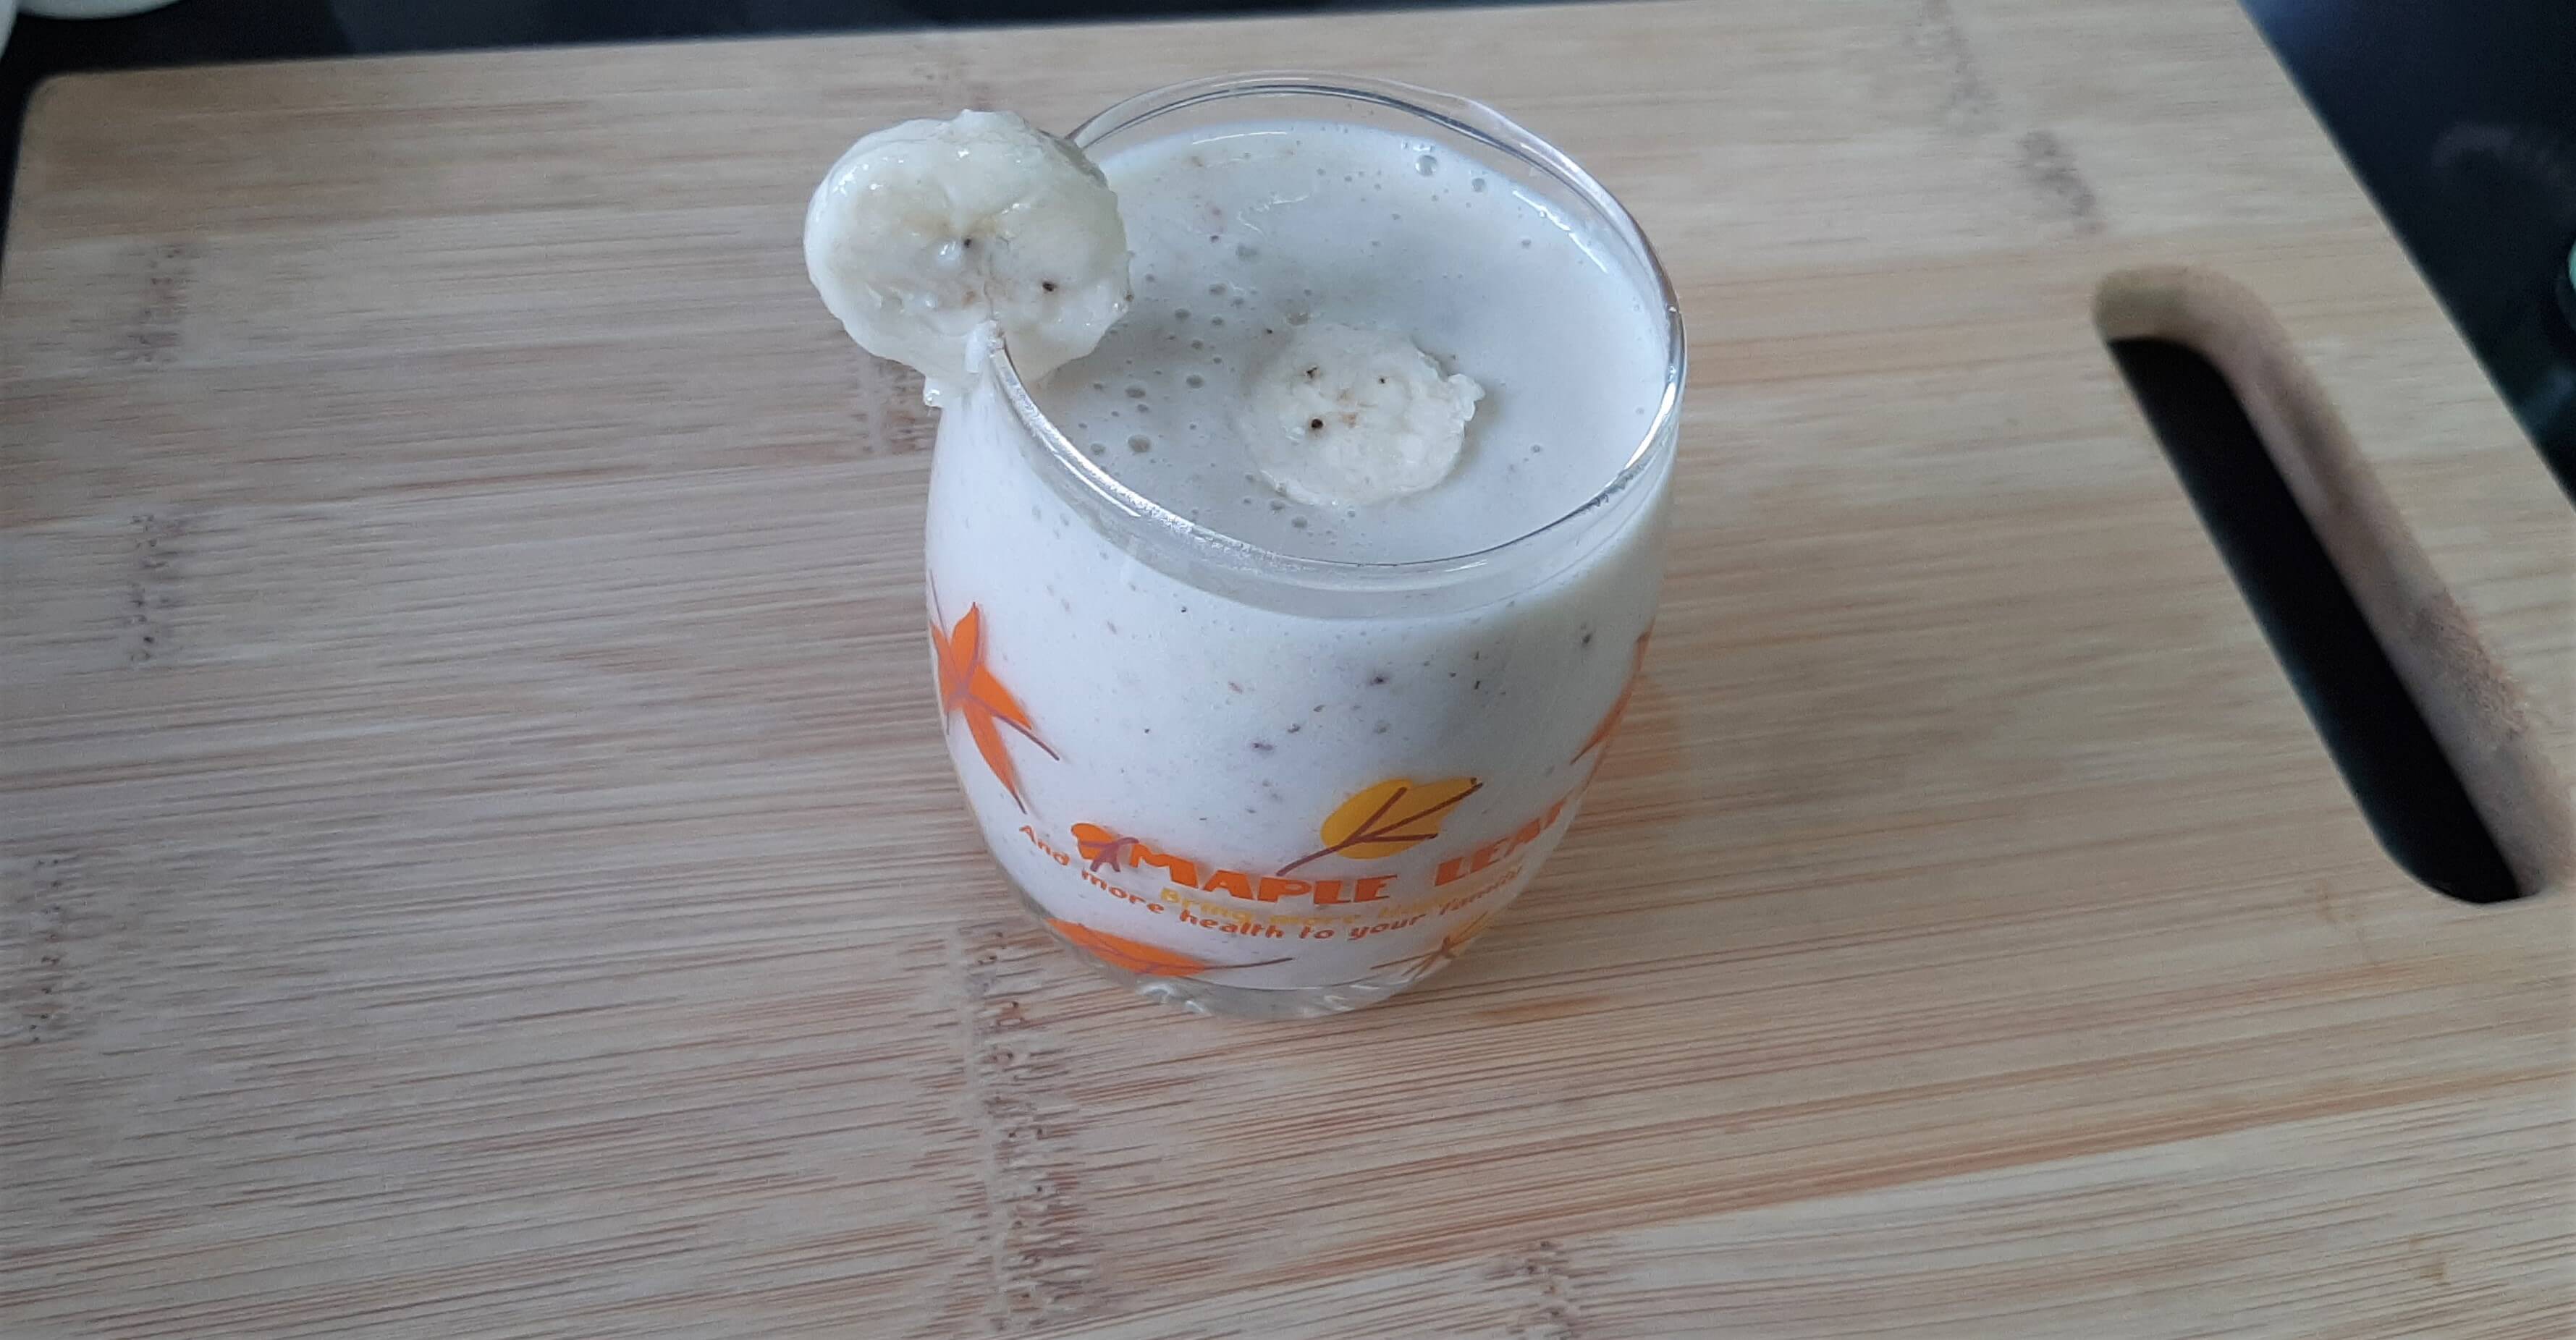 Banana milkshake in a glass